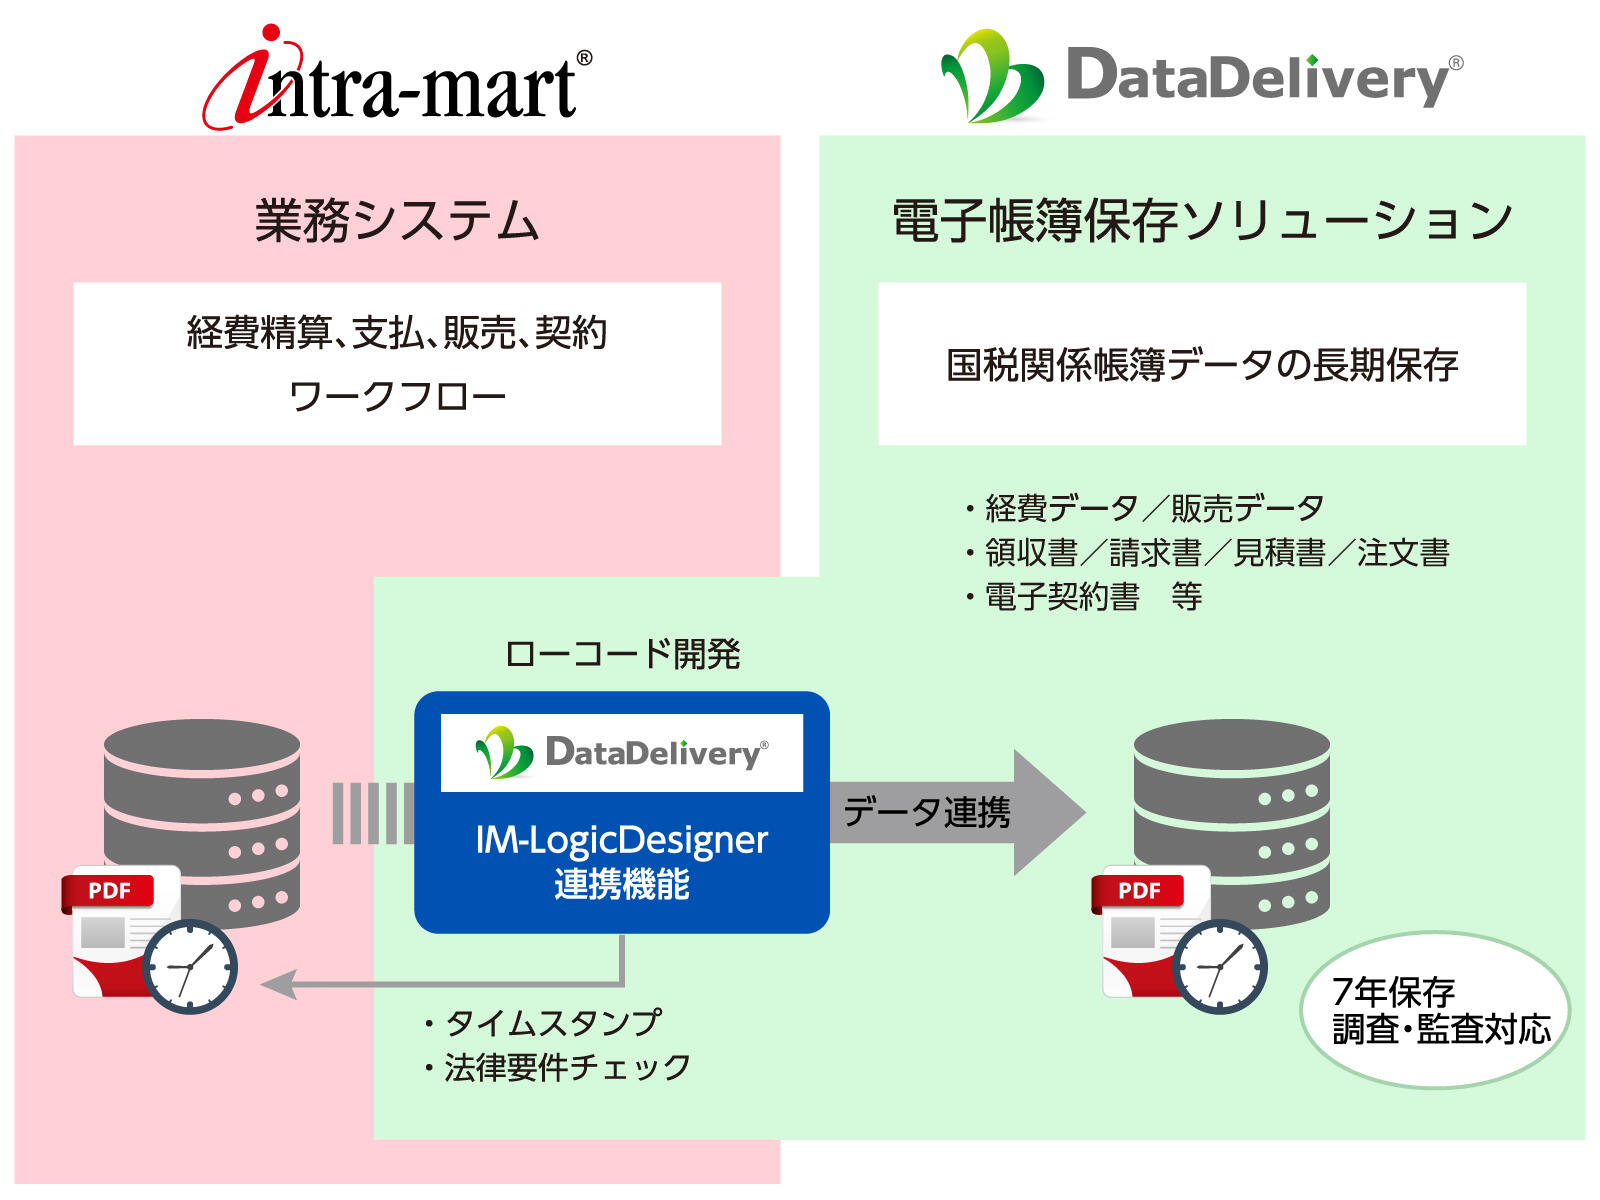 「intra-mart<sup>®</sup>」・「DataDelivery<sup>®</sup>」連携機能イメージ